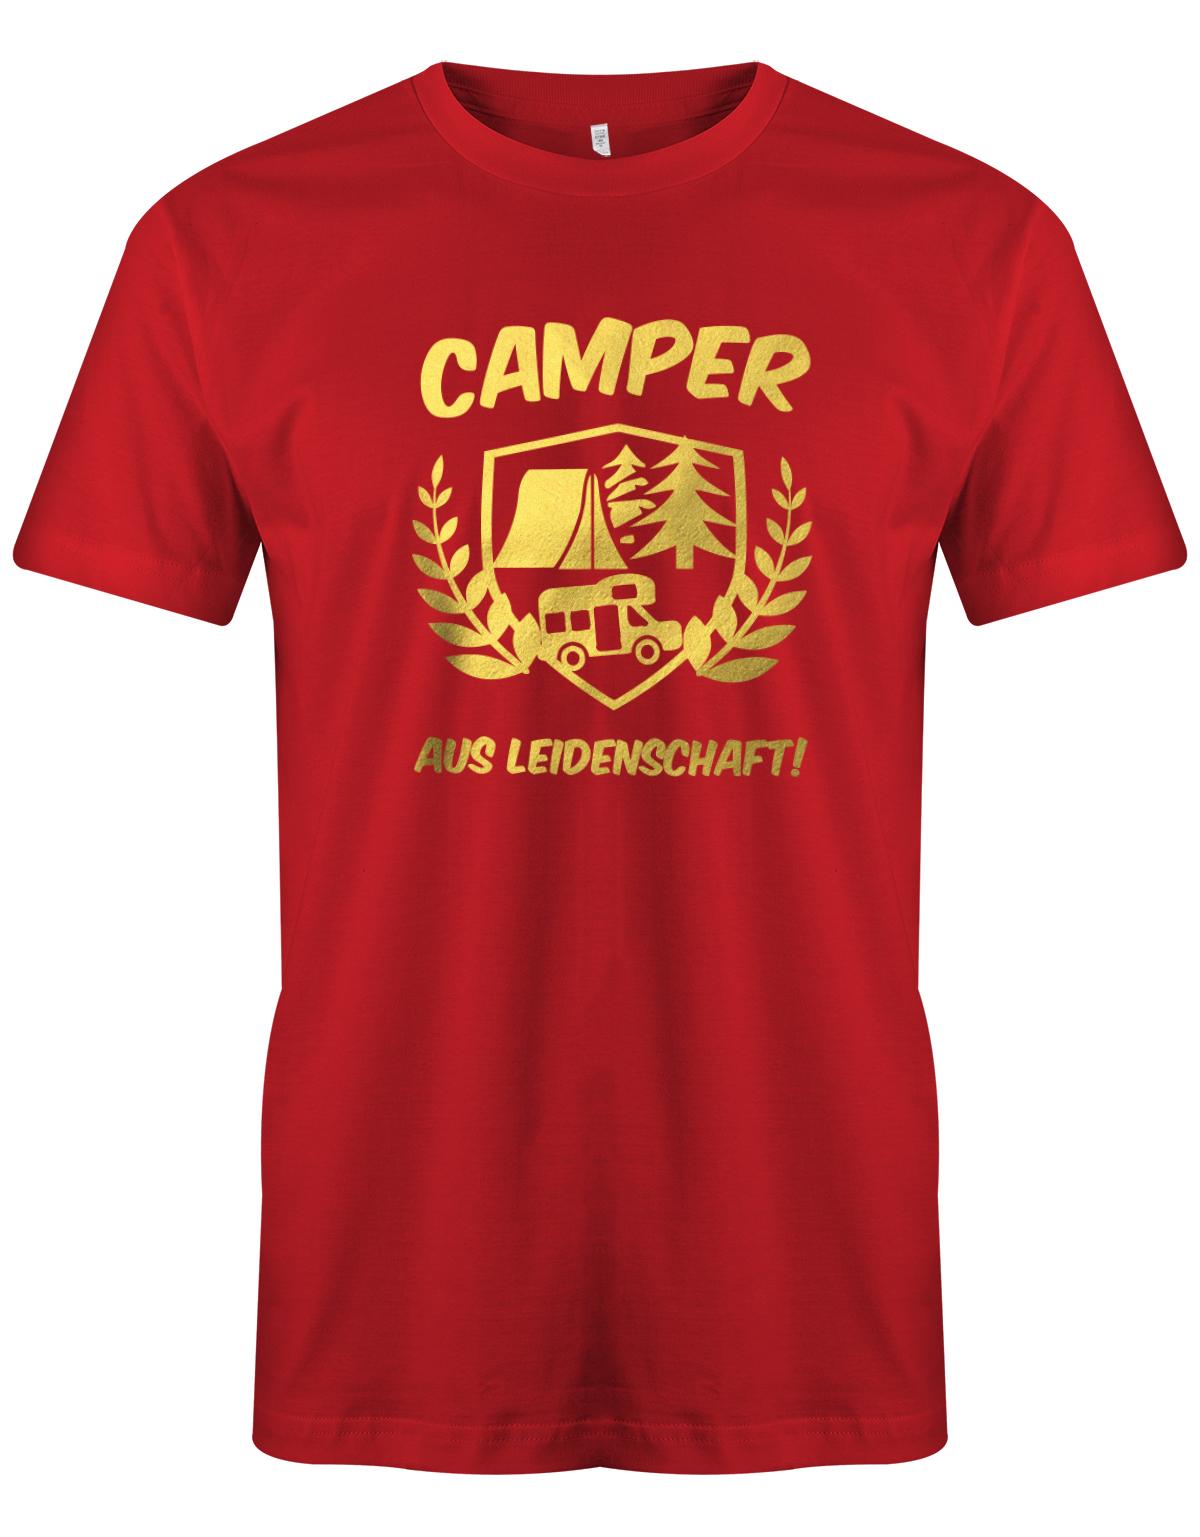 Camper-aus-leidenschaft-Herren-Camper-SHirt-rot